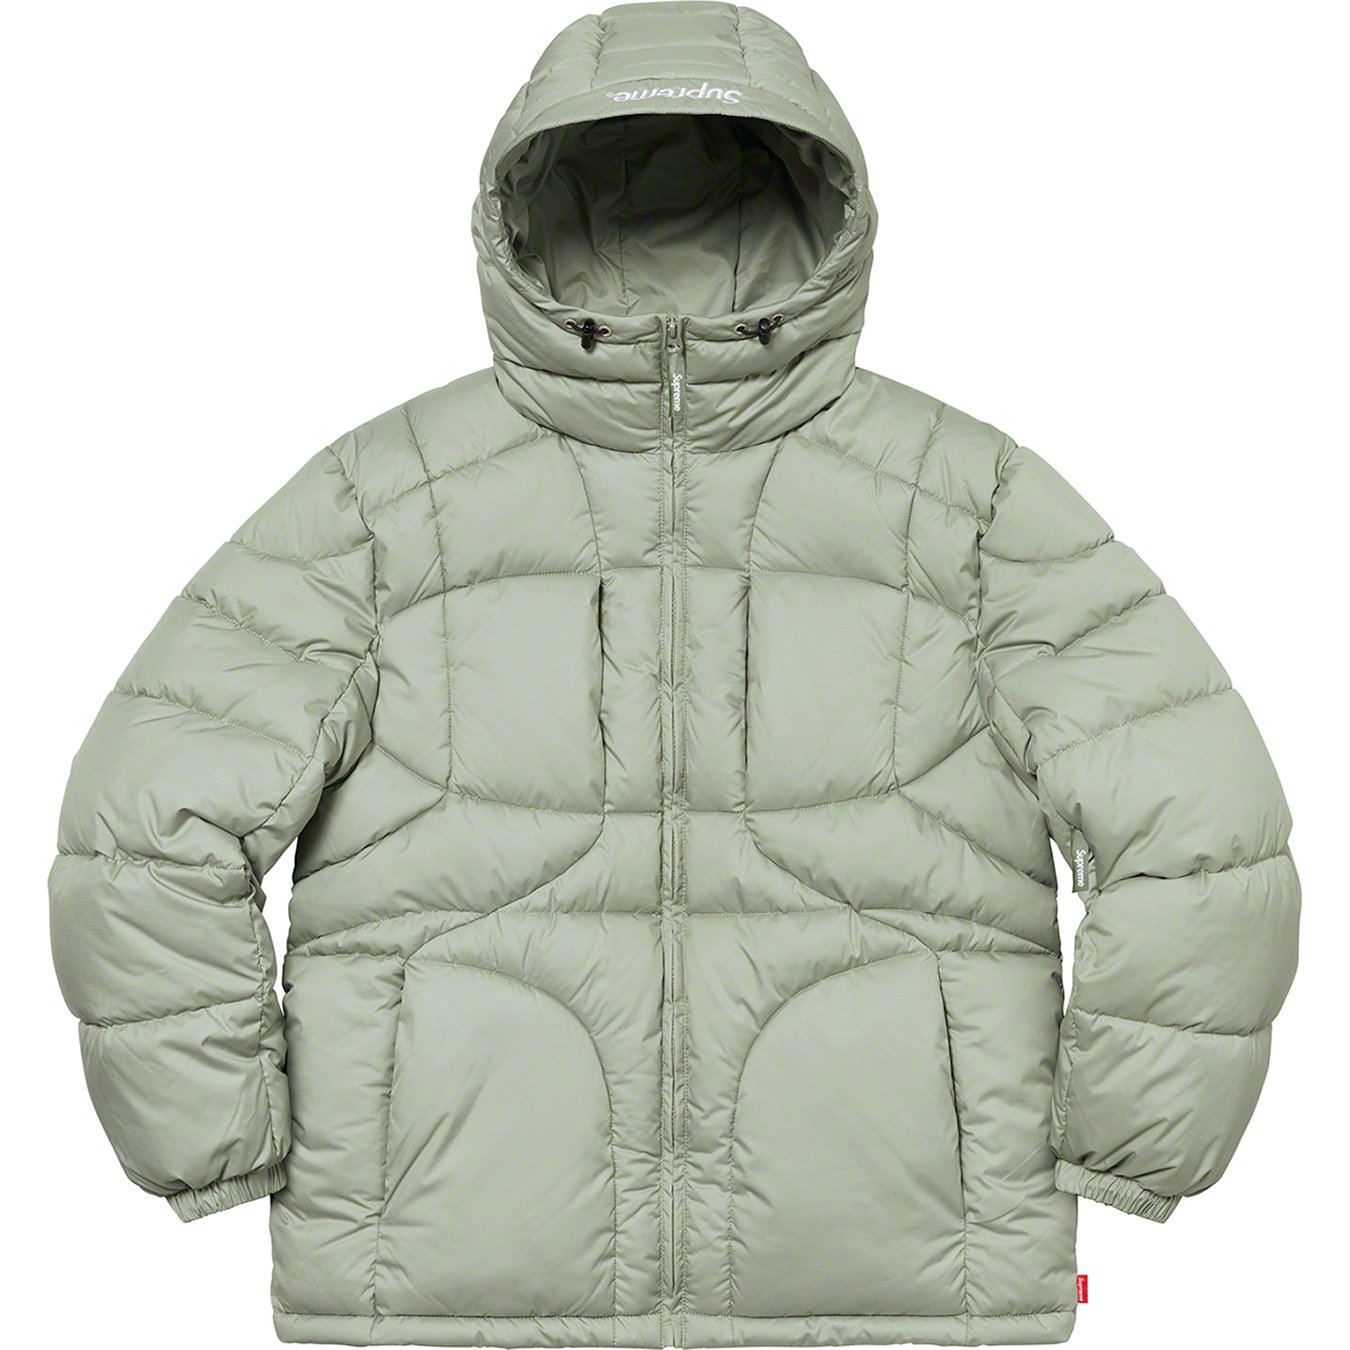 Warp Hooded Puffy Jacket - fall winter 2021 - Supreme